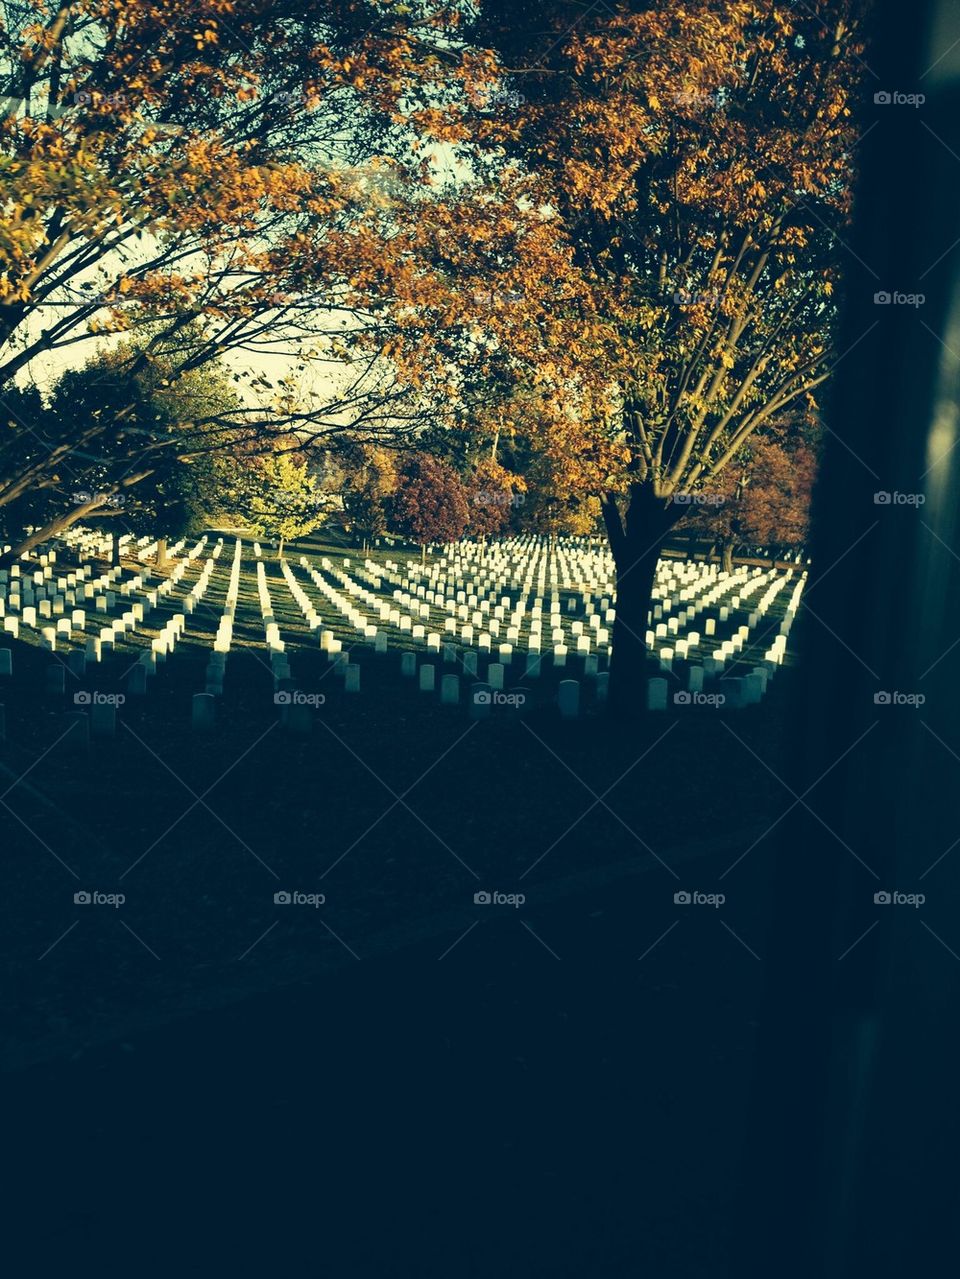 Arlington cemetery 